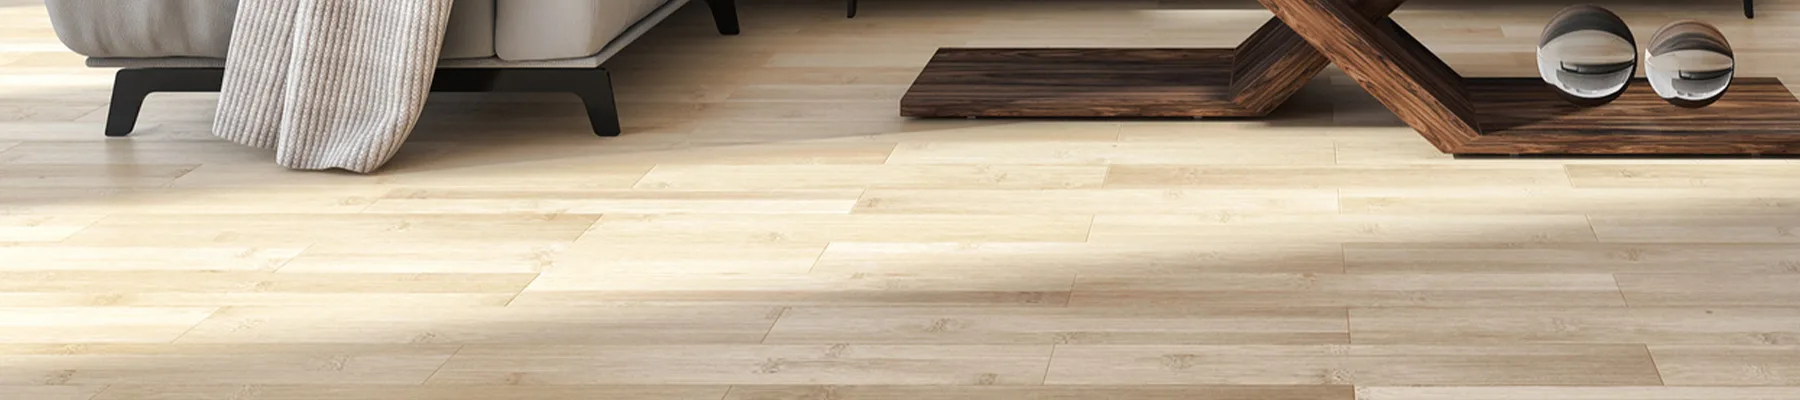 Laminate flooring installed in modern living room